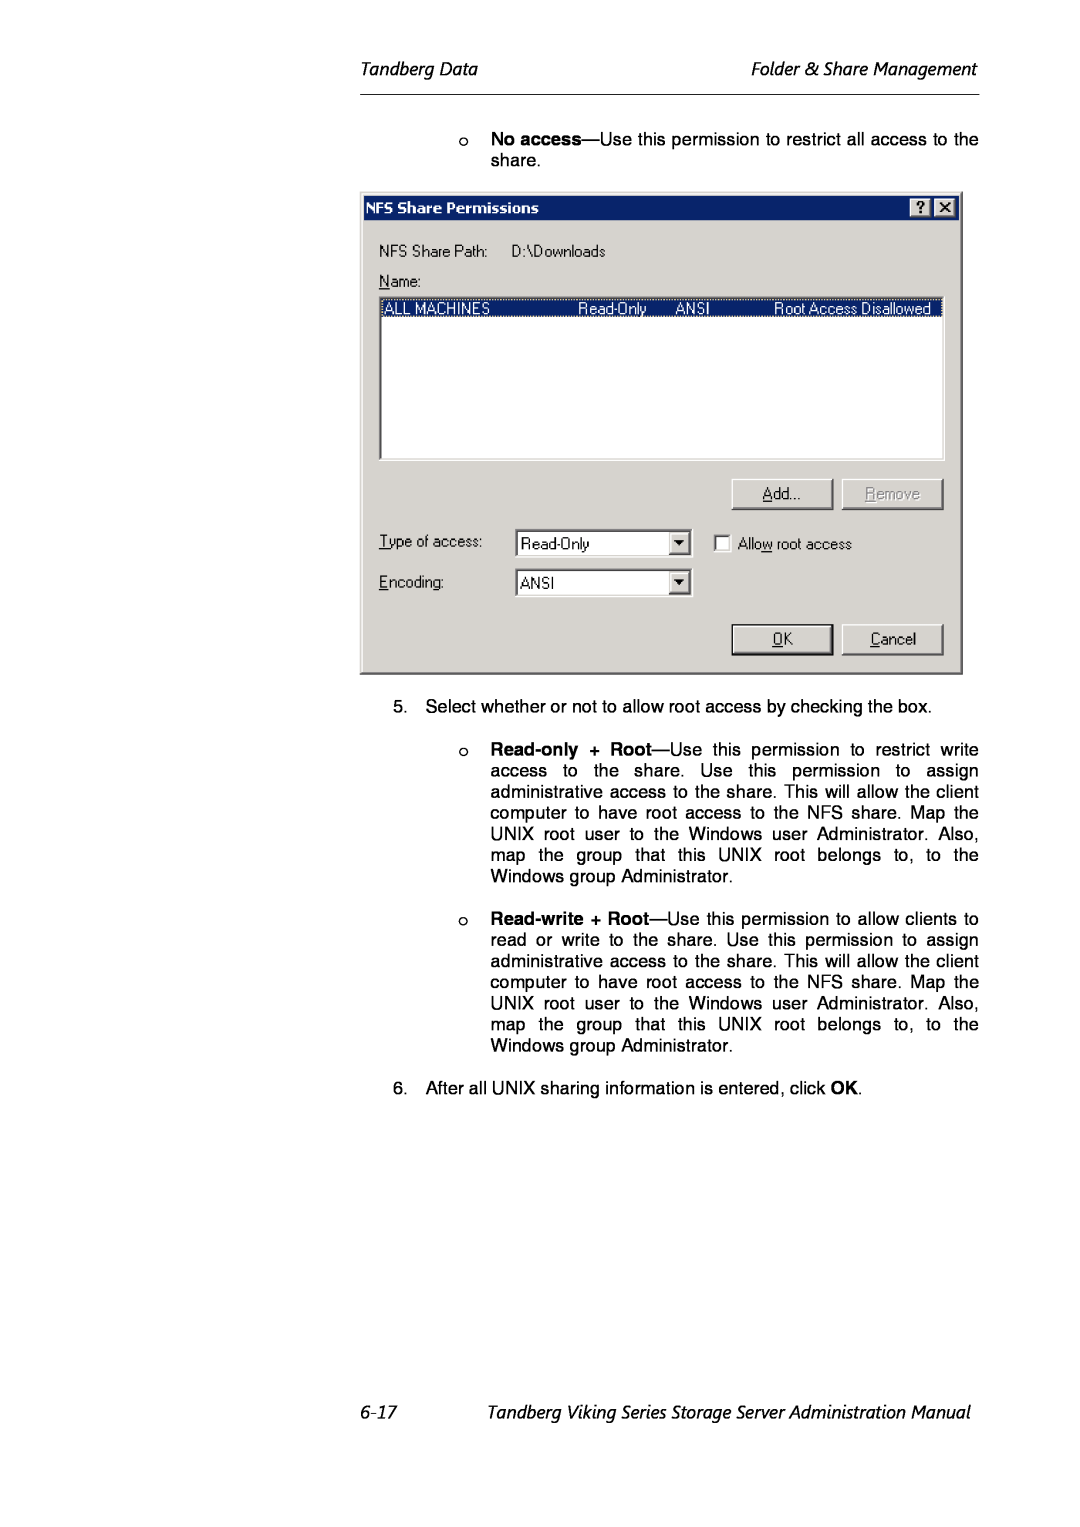 Tandberg Data Viking FS-1600, Viking FS-1500, Viking FS-412 manual 6-17, Tandberg DataFolder & Share Management 